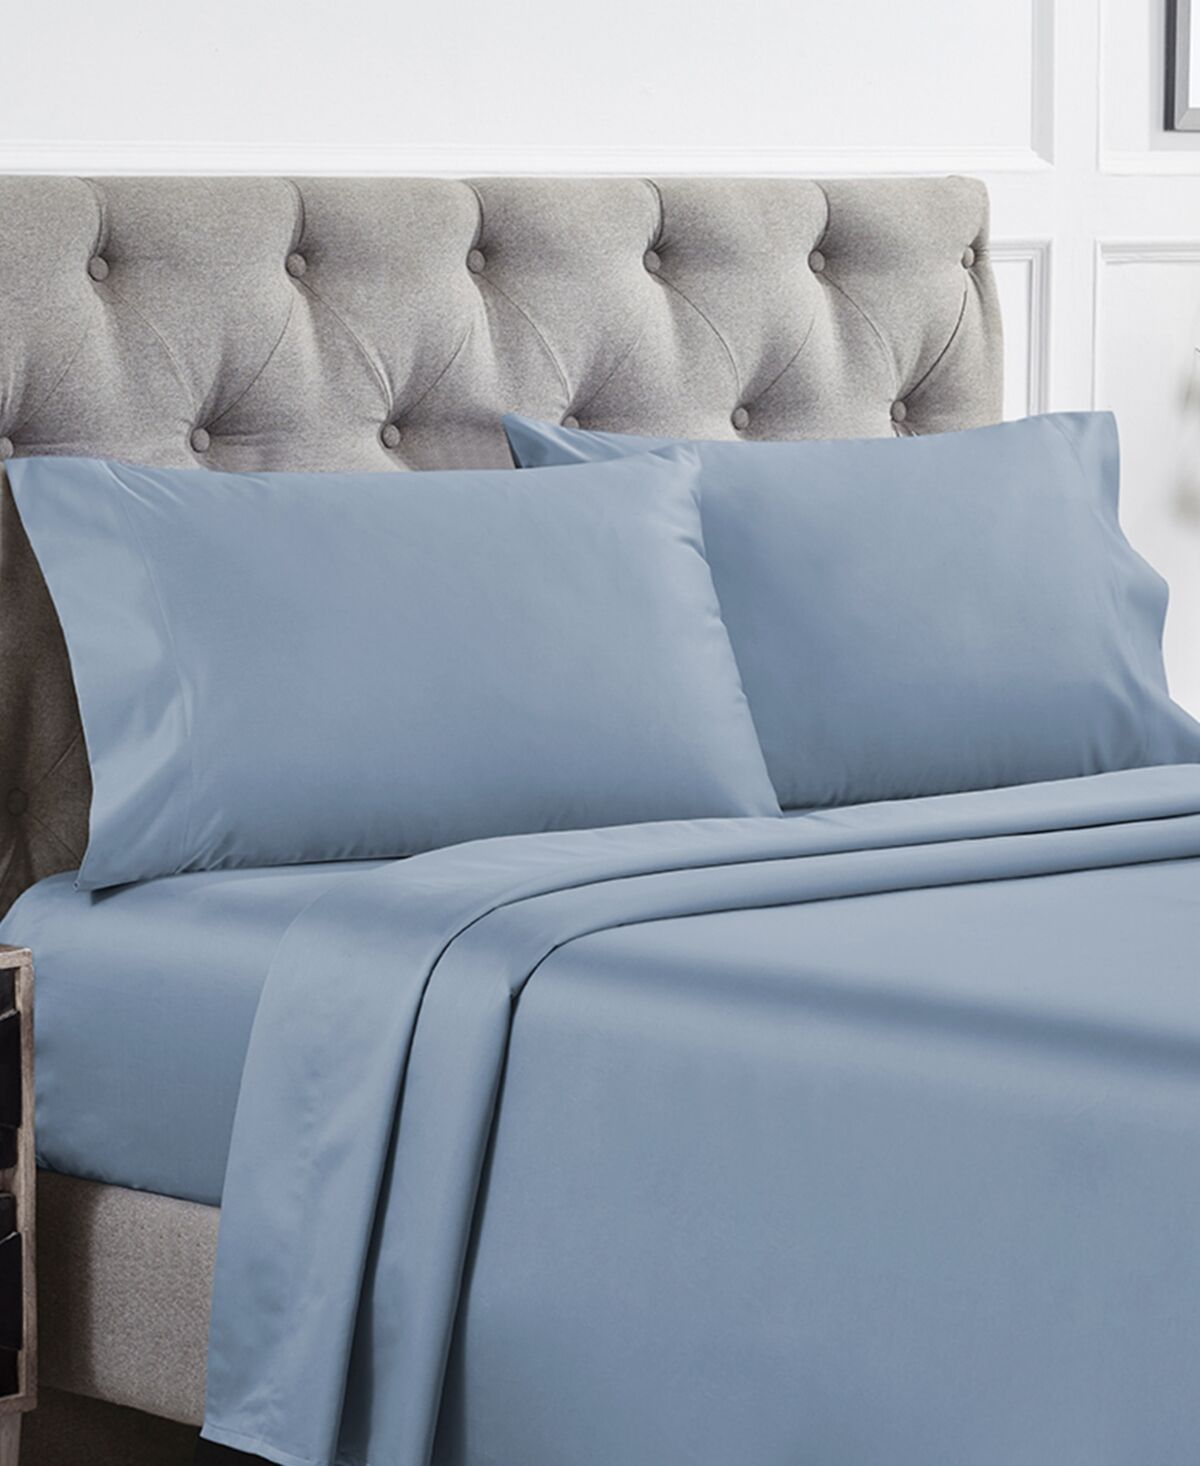 California Design Den Luxury 1000 Thread Count Bed Sheets Set - 100% Cotton Sateen - Soft, Thick & Deep Pocket - King - Blue